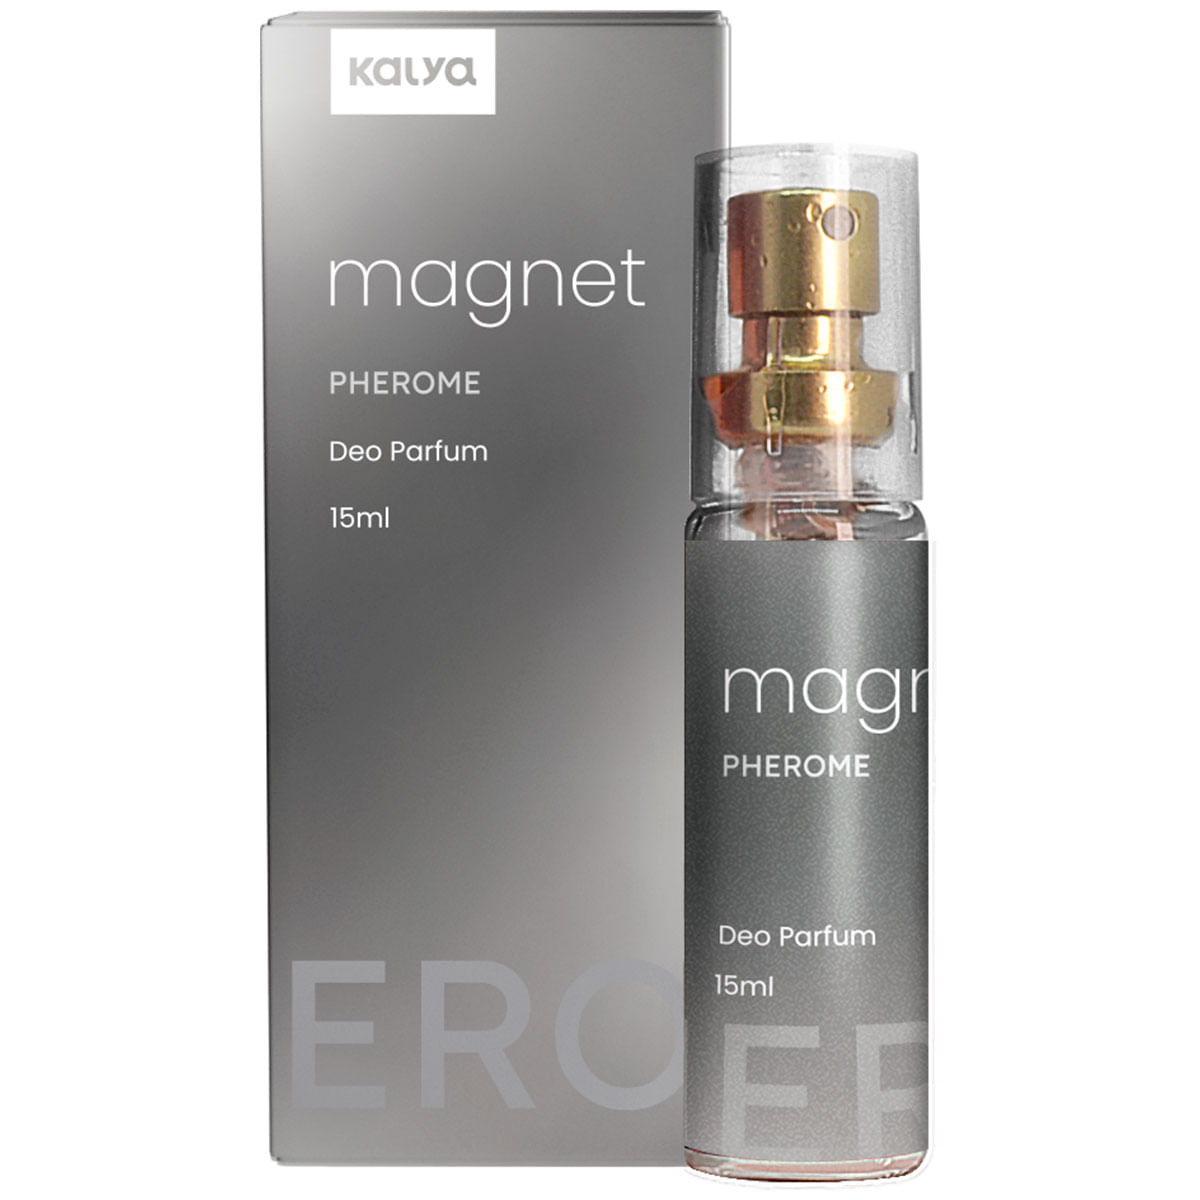 Magnet Pherome Perfume Masculino com Estimulador de Feromônio 15ml Kalya